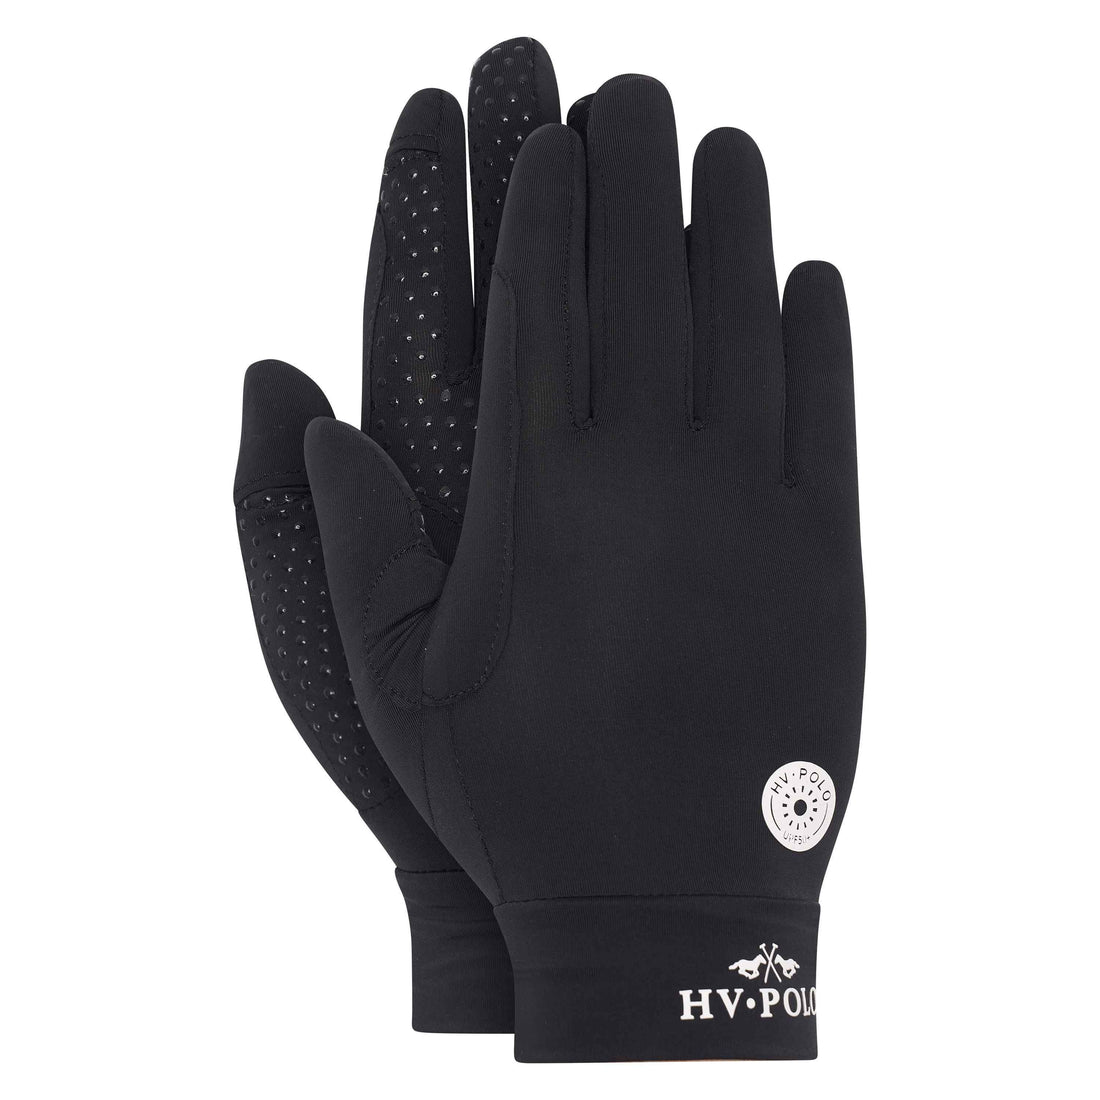 HV Polo - Handsker, UV Gloves, Suzy - Black